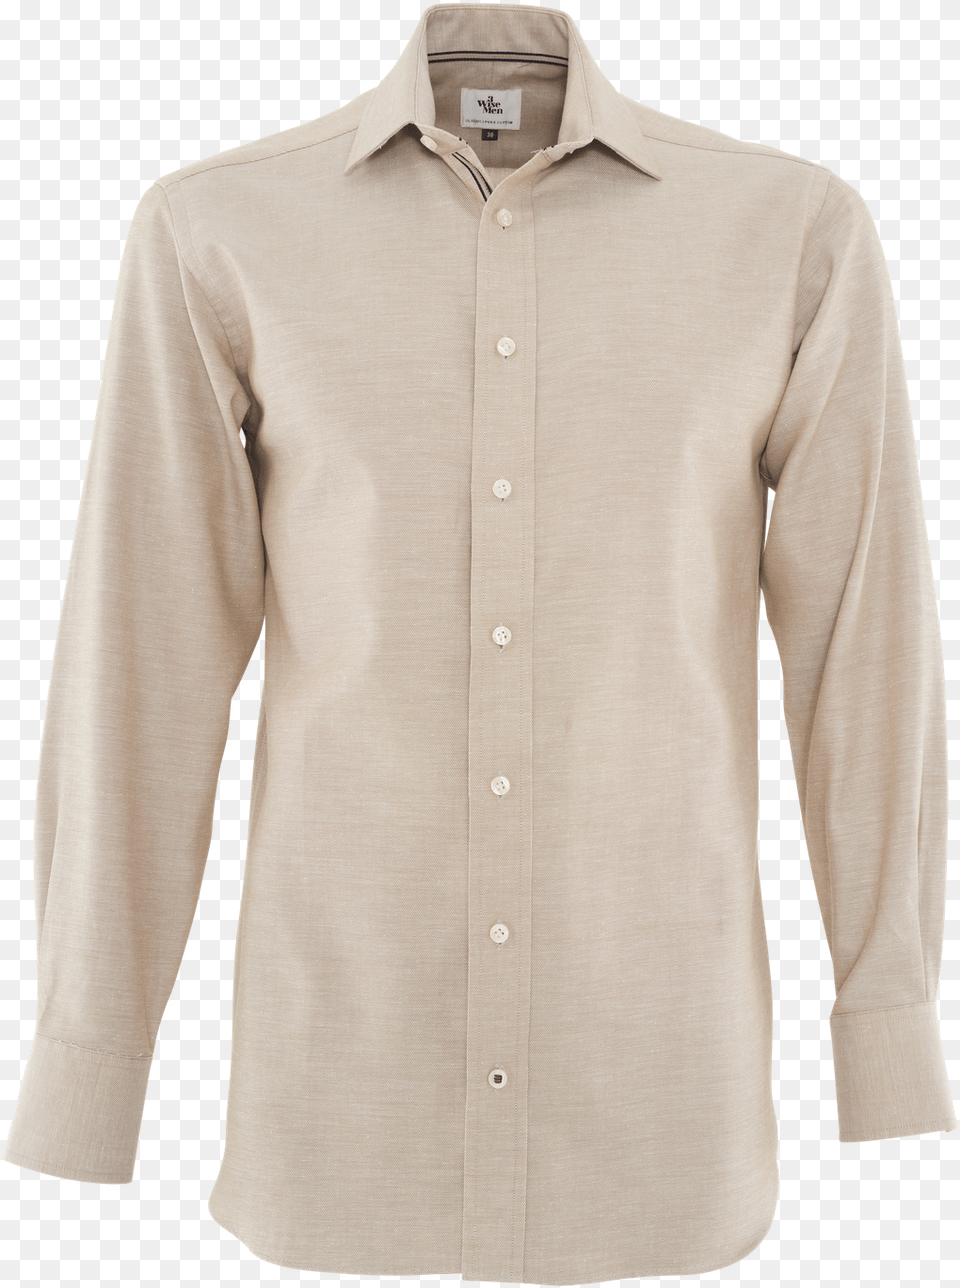 Pocket, Clothing, Coat, Dress Shirt, Home Decor Png Image